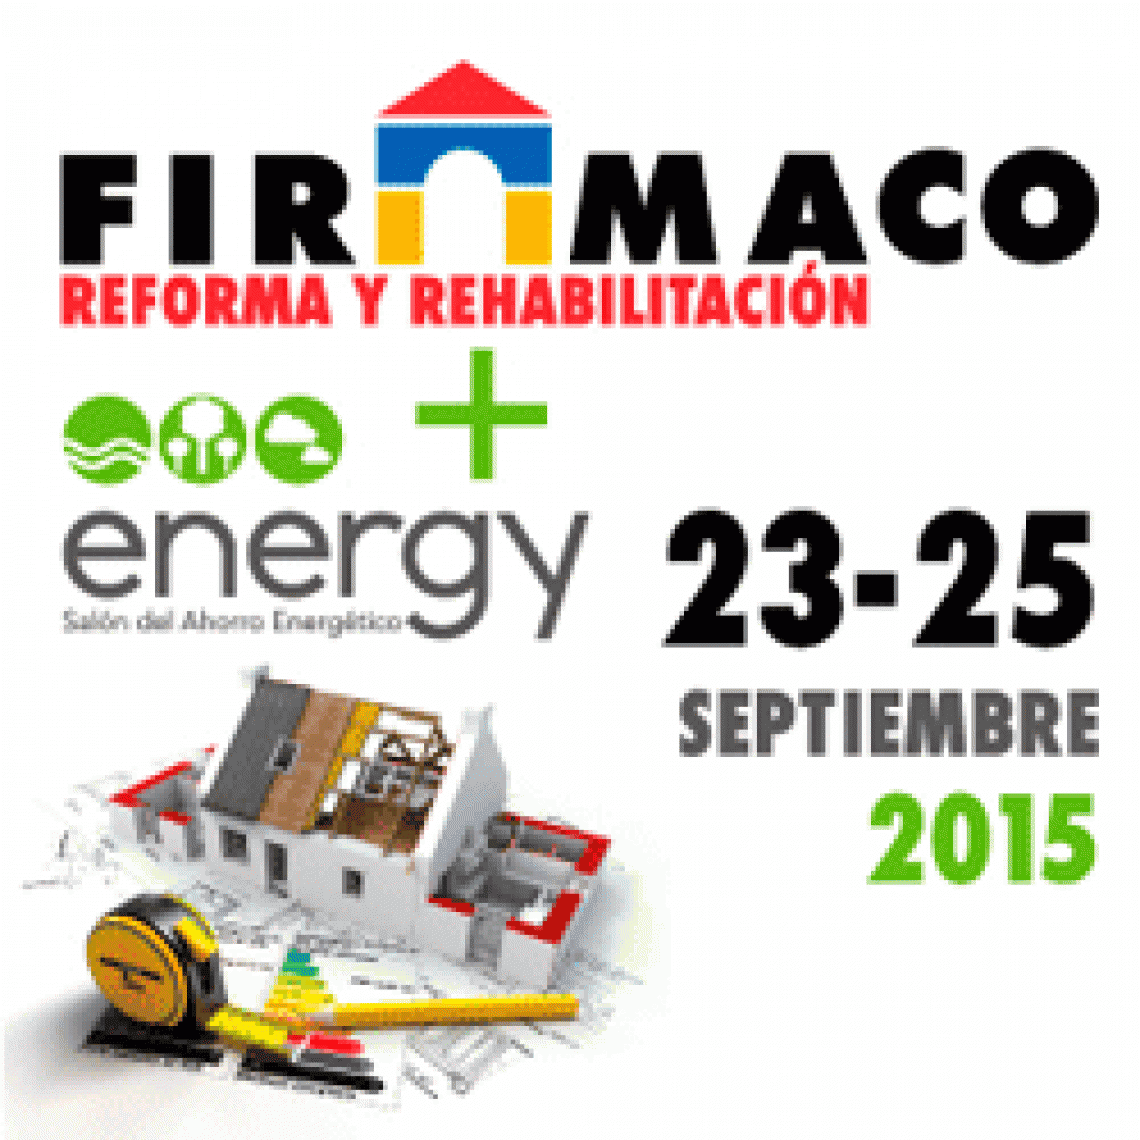 Firamaco Energy 2015